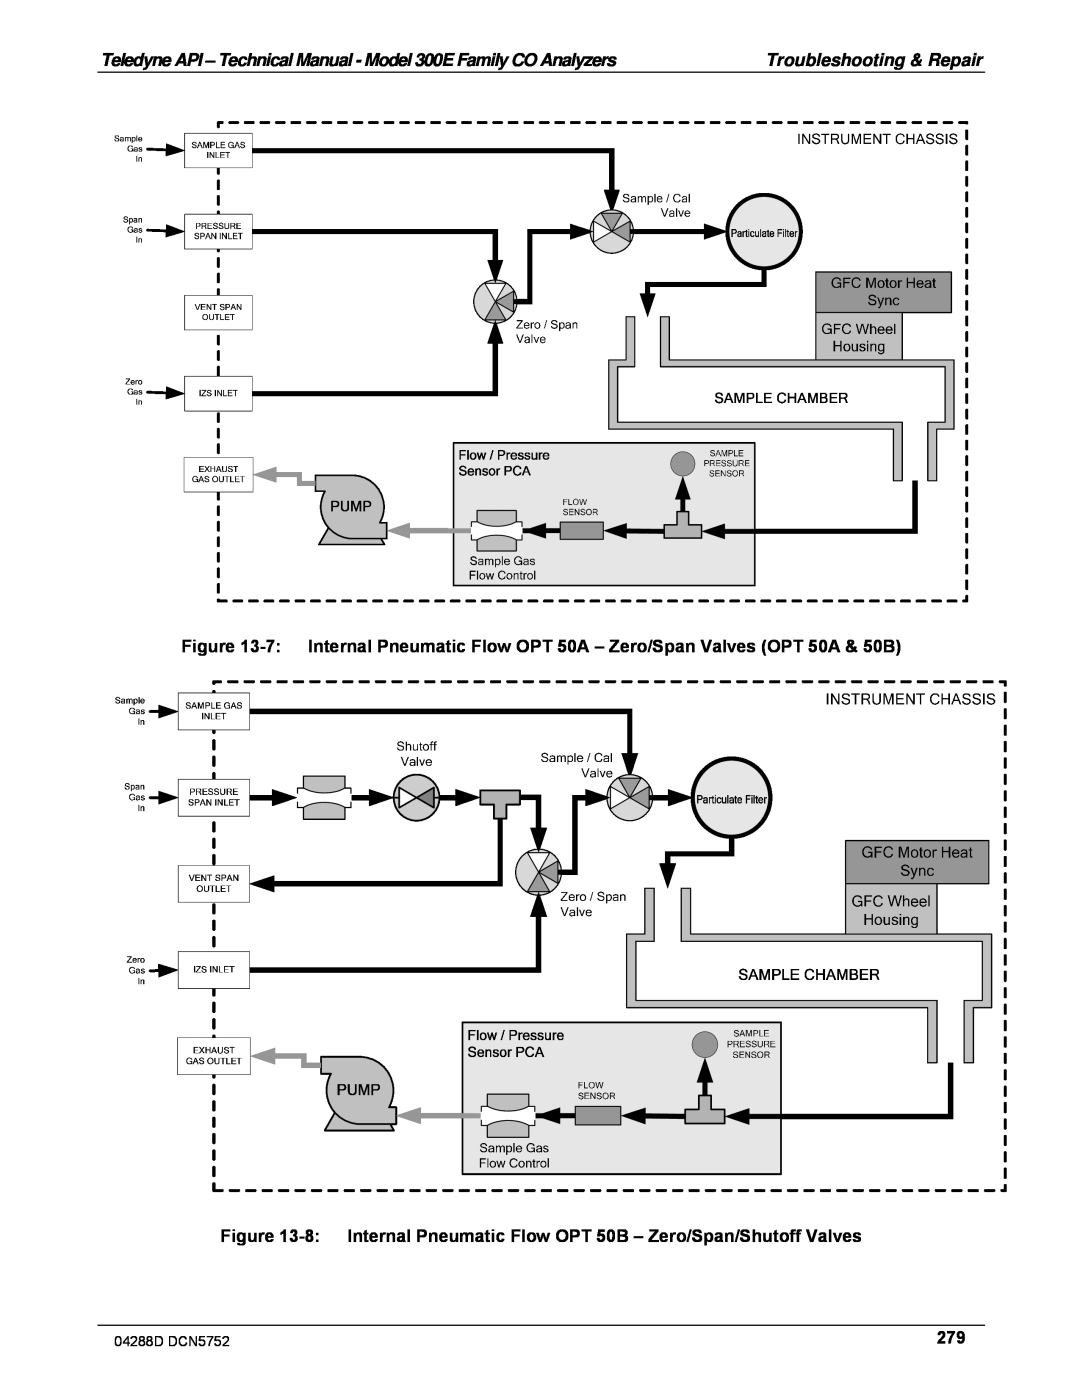 Teledyne M300EM operation manual 7:Internal Pneumatic Flow OPT 50A – Zero/Span Valves OPT 50A & 50B 